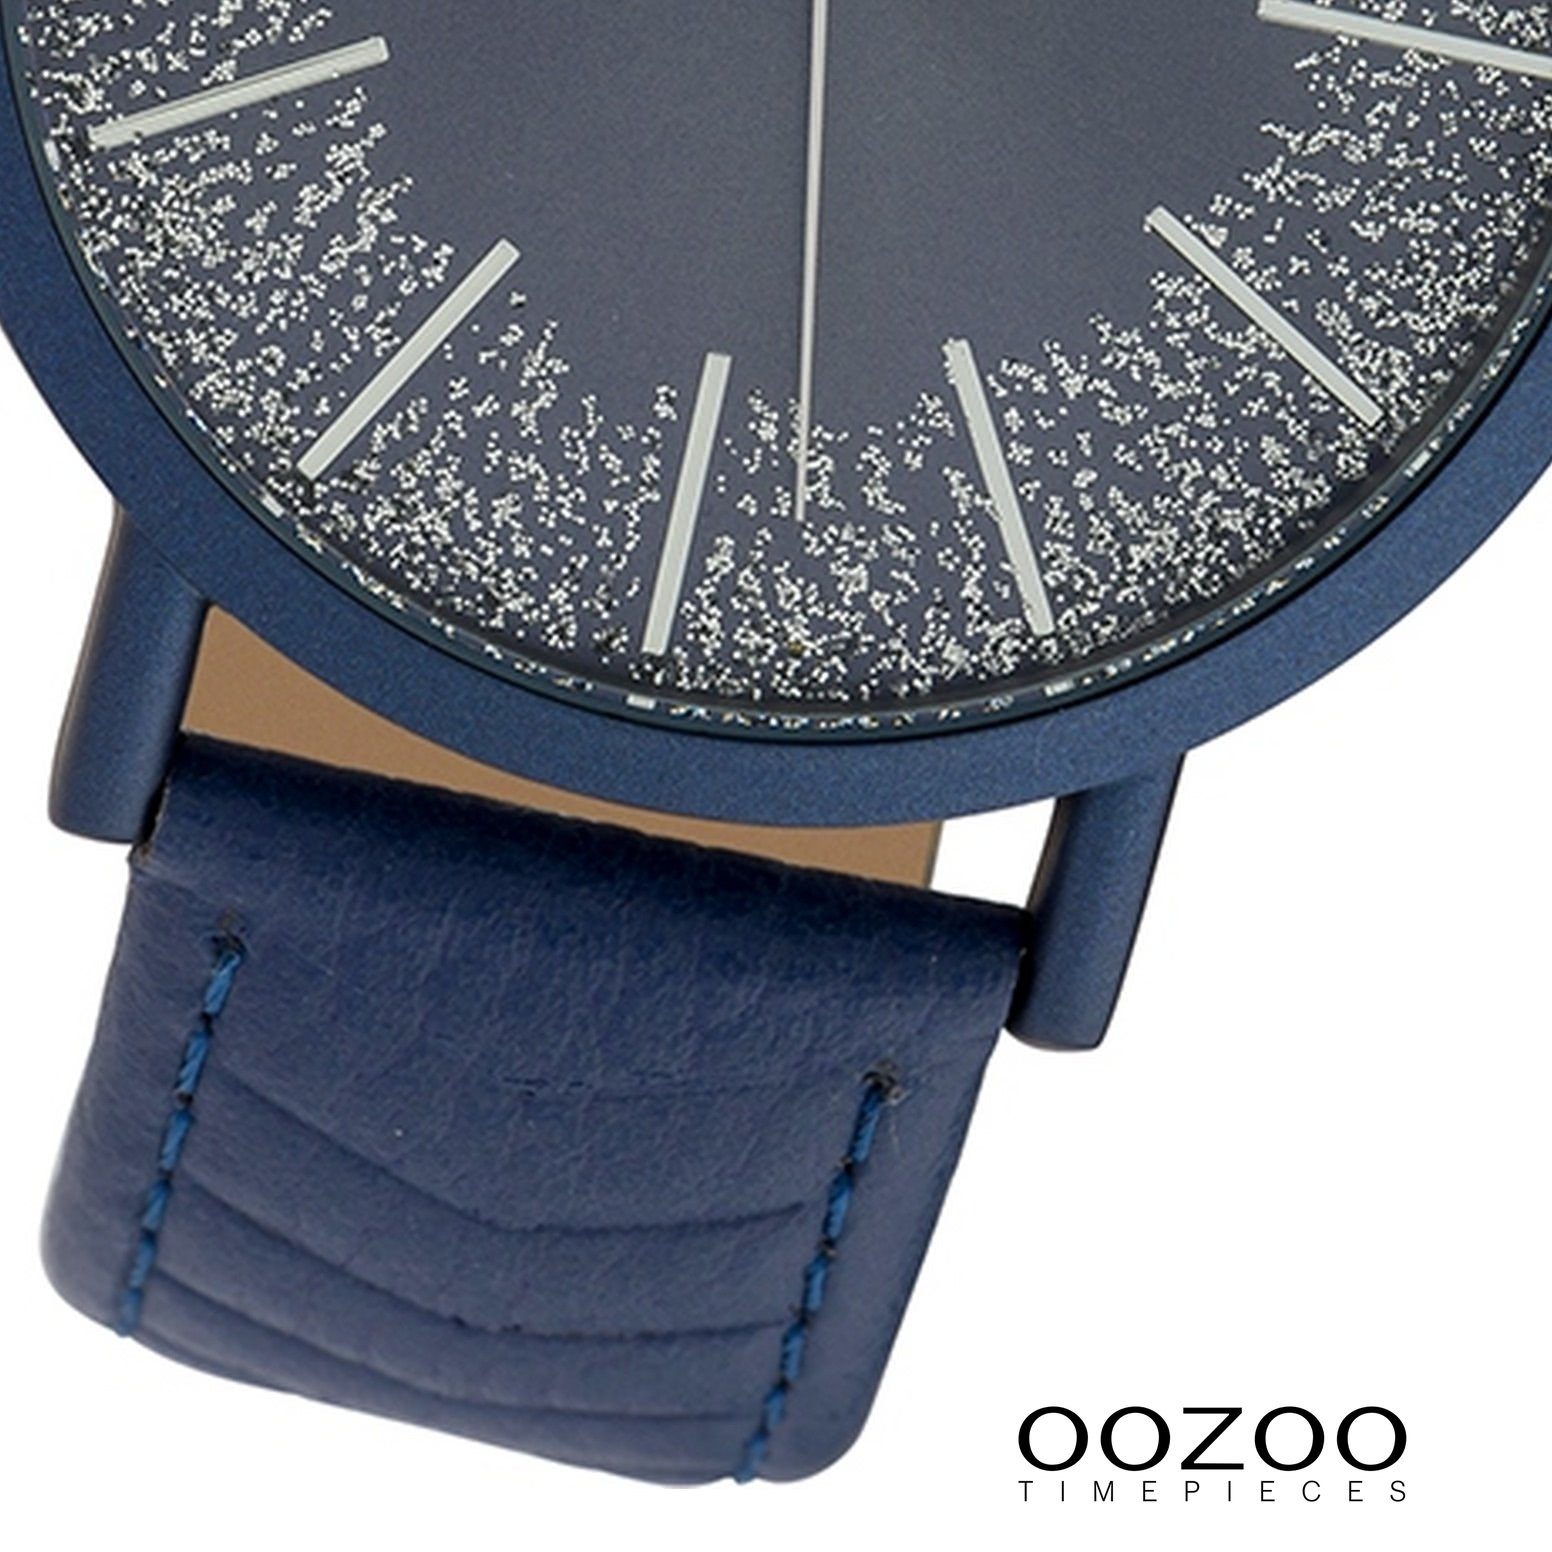 OOZOO rund, Oozoo (ca. Damenuhr Fashion Damen-Uhr groß dunkelblau, 42mm), Lederarmband Quarzuhr dunkelblau,